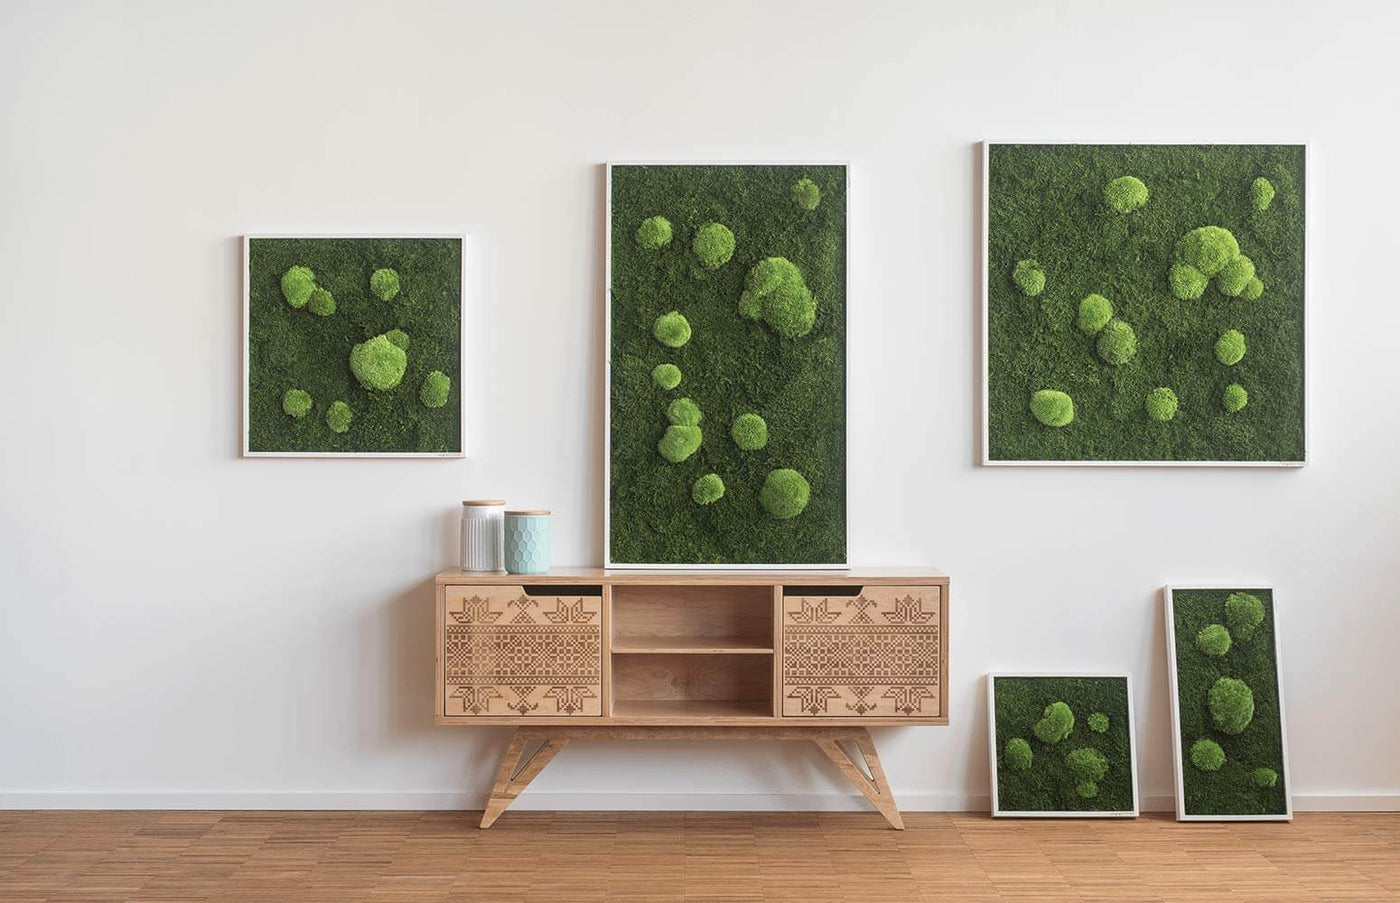 Green Wide Moss Wall Art (140x40cm)-Wall Decor-MOSS FRAMES, MOSS PICTURES, MOSS WALL ART, PLANTS-Forest Homes-Nature inspired decor-Nature decor